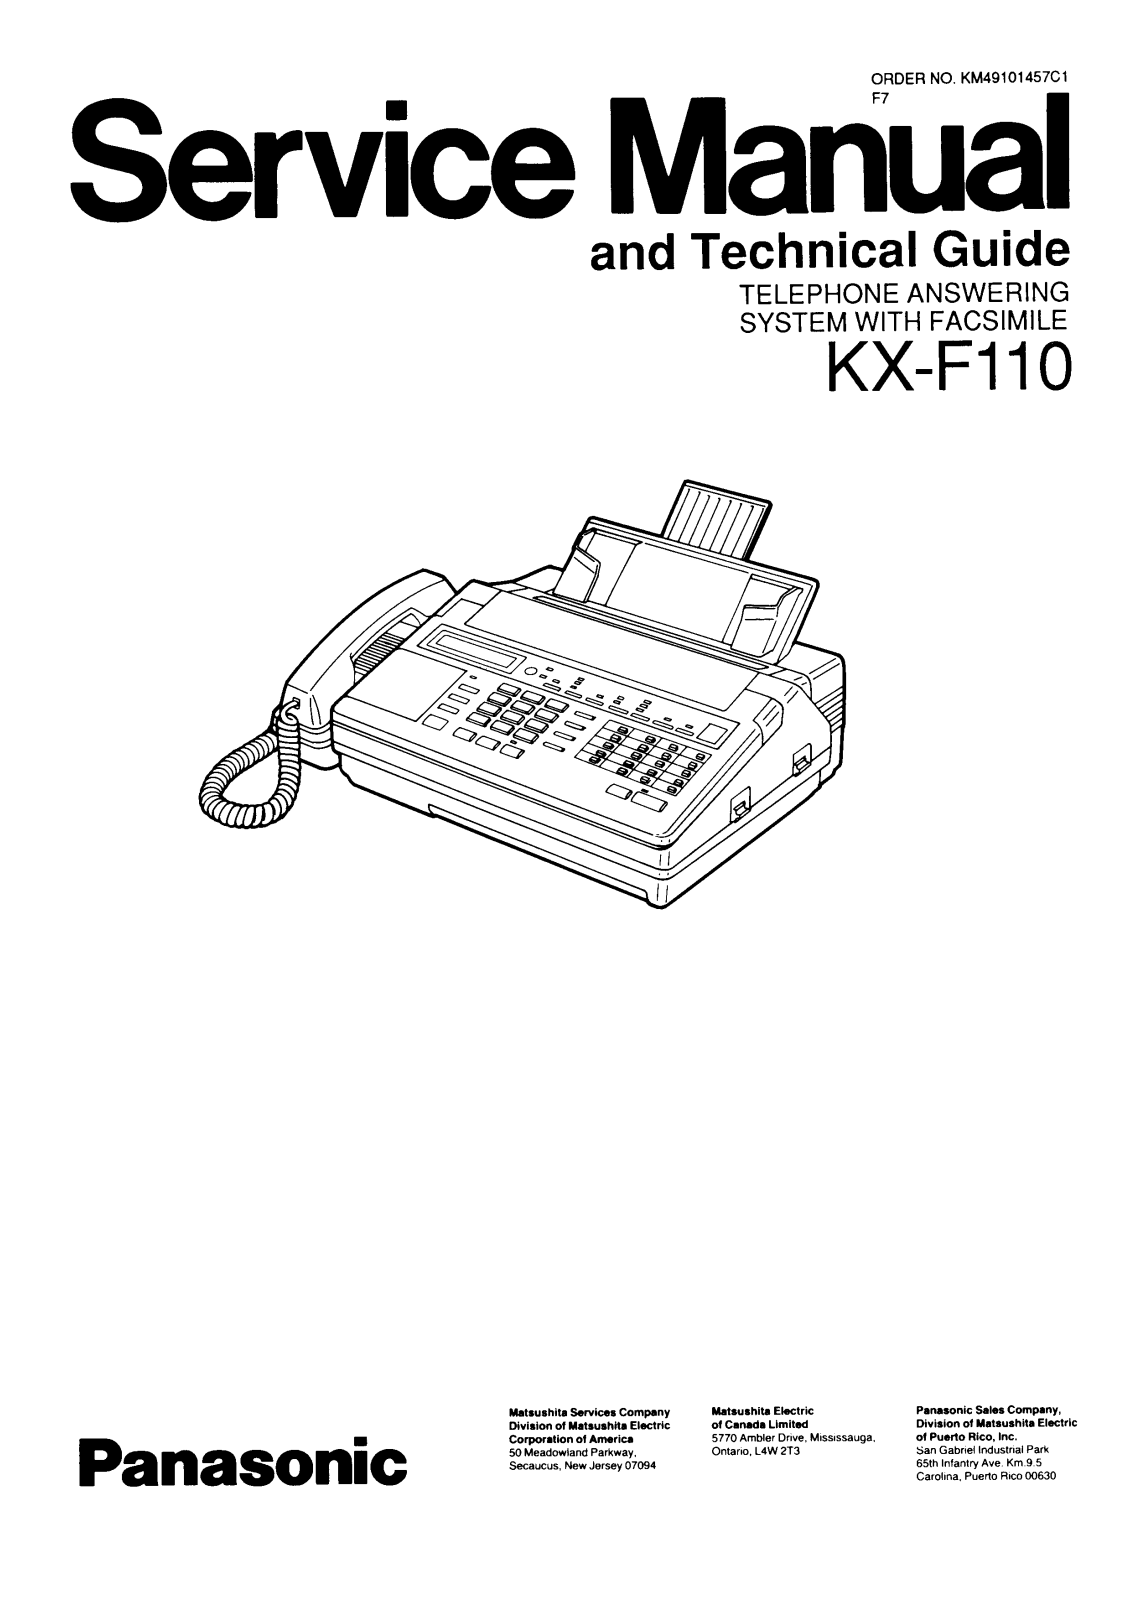 Panasonic kx-f110 Service Manual